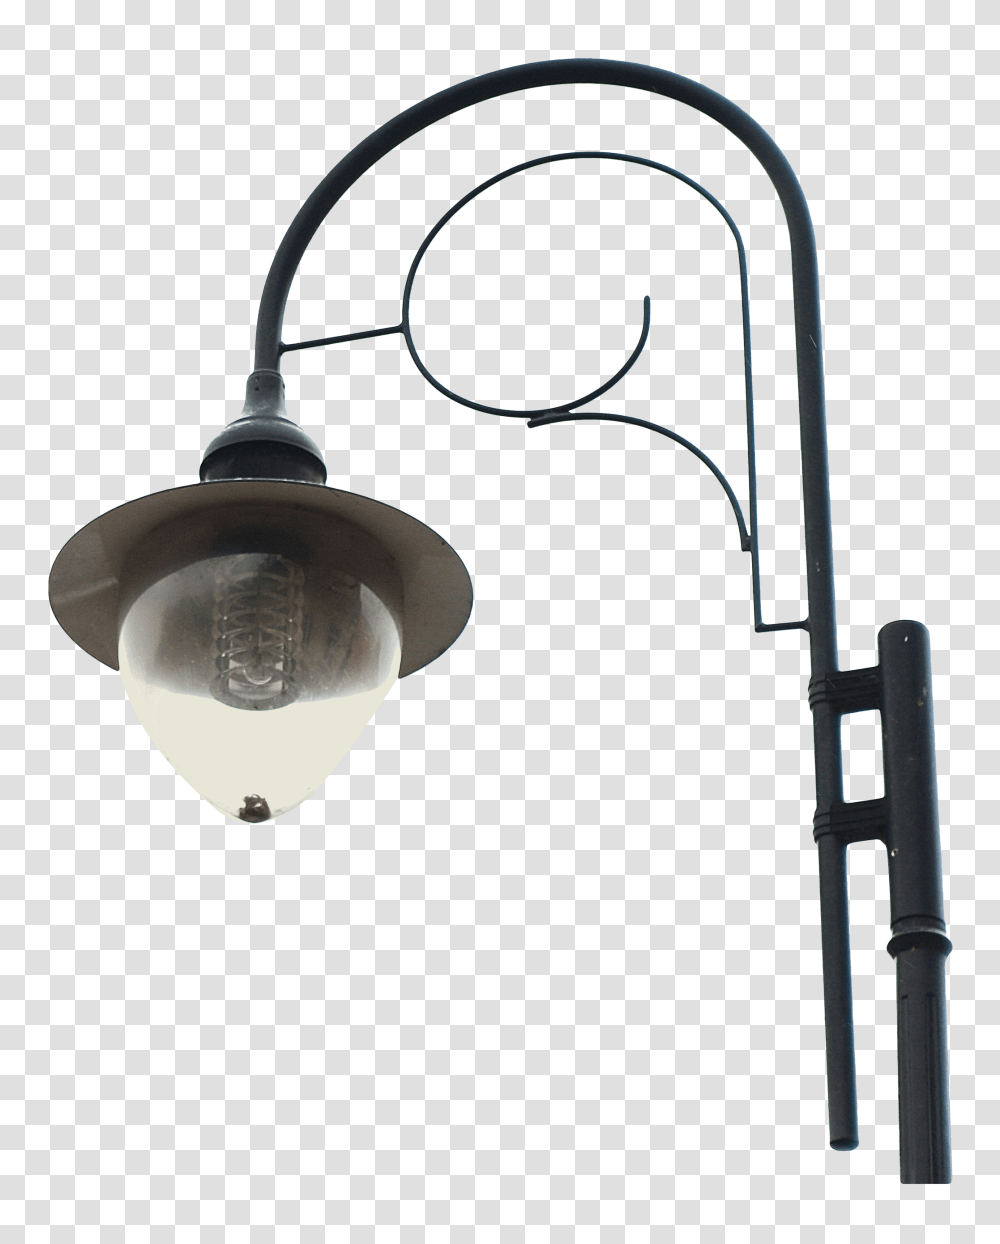 Street Light Image, Lamp, Lamp Post, Lampshade Transparent Png